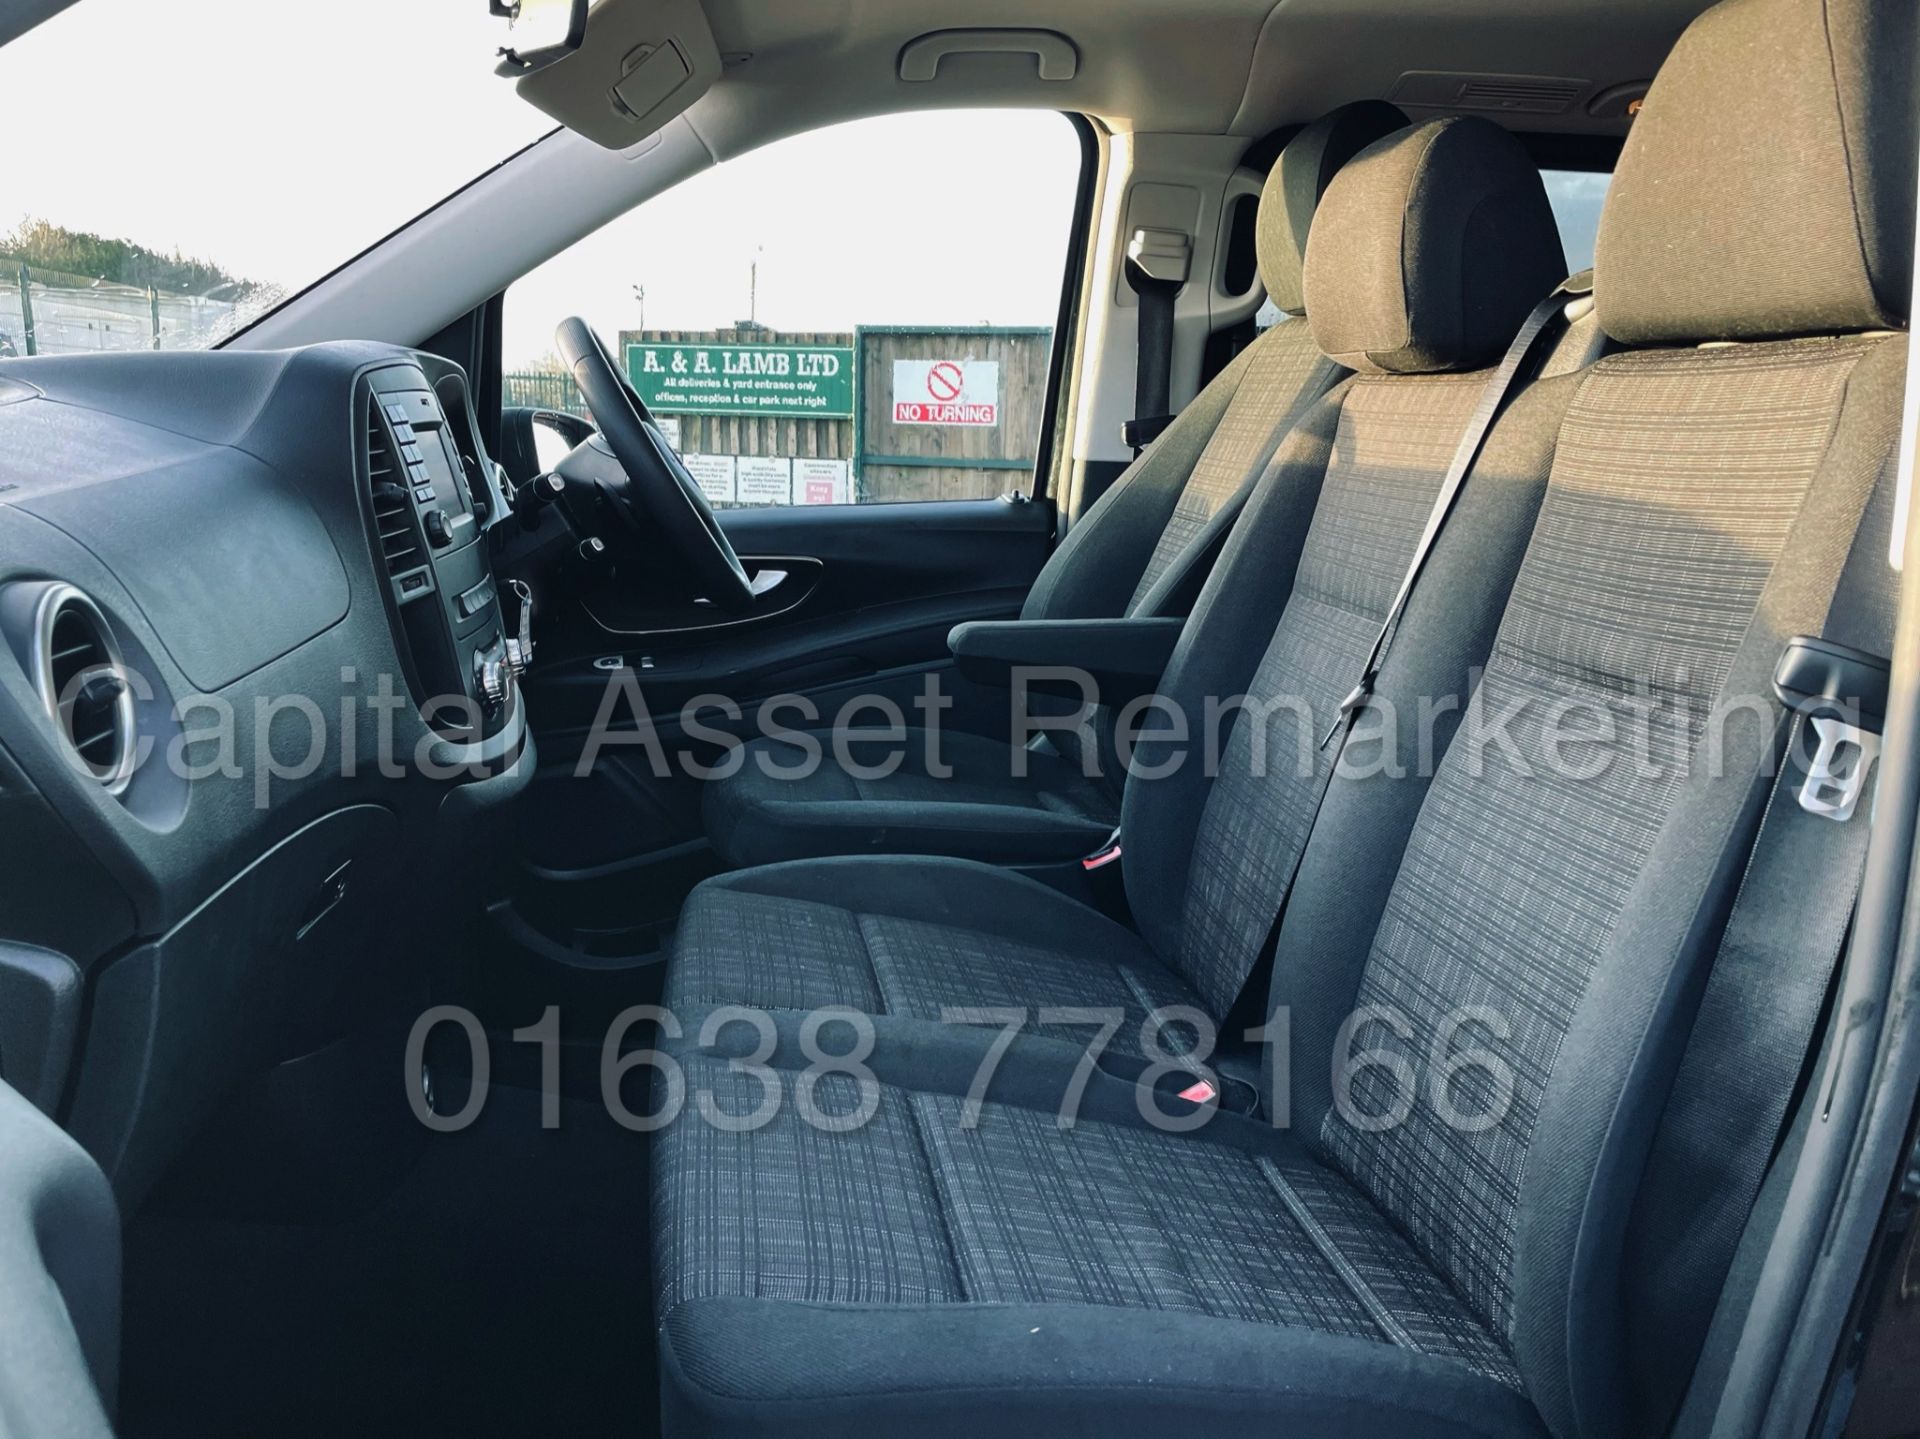 (On Sale) MERCEDES-BENZ VITO 114 *9 SEATER - TOURER* (2019 - EURO 6) '9-G TRONIC AUTO-SAT NAV - A/C' - Image 23 of 50